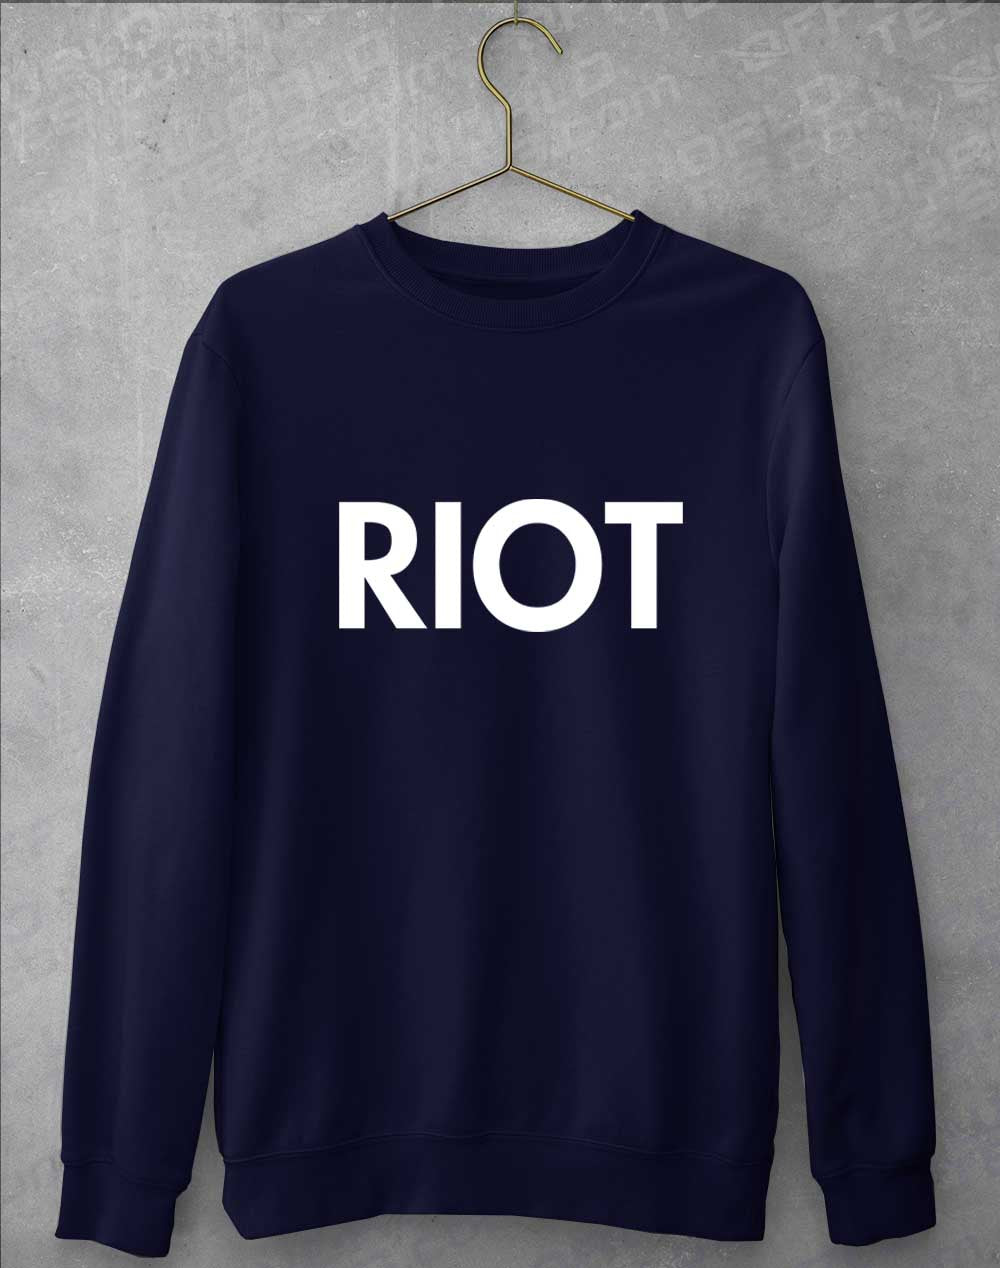 Oxford Navy - Mac's Riot Sweatshirt